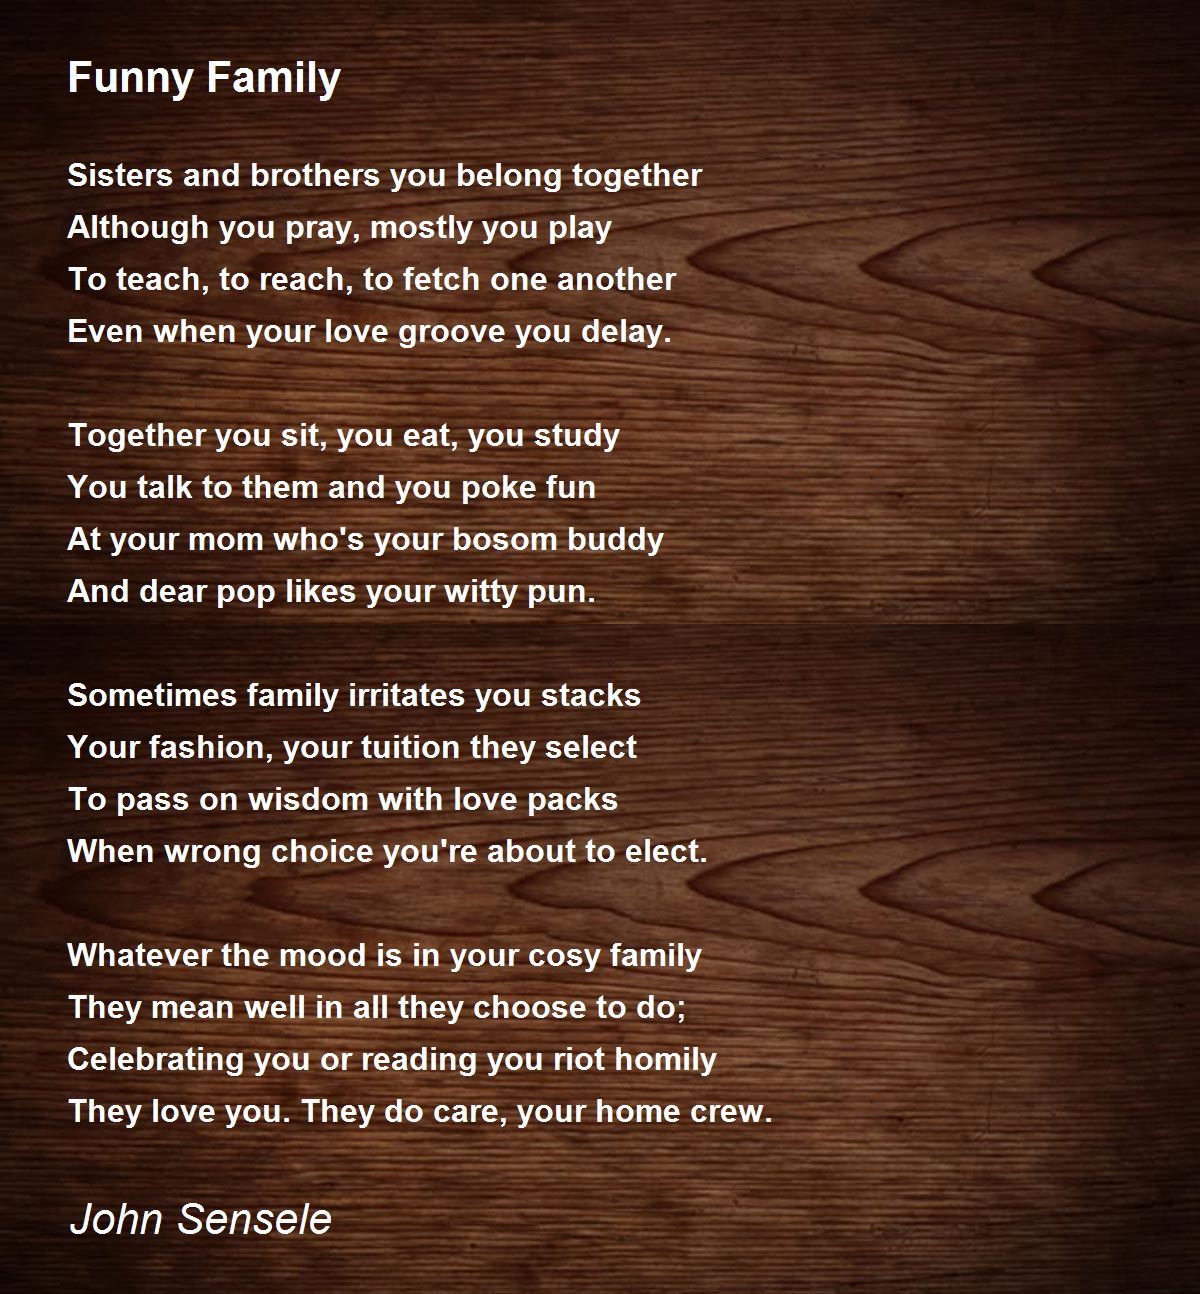 Funny Family - Funny Family Poem by John Sensele